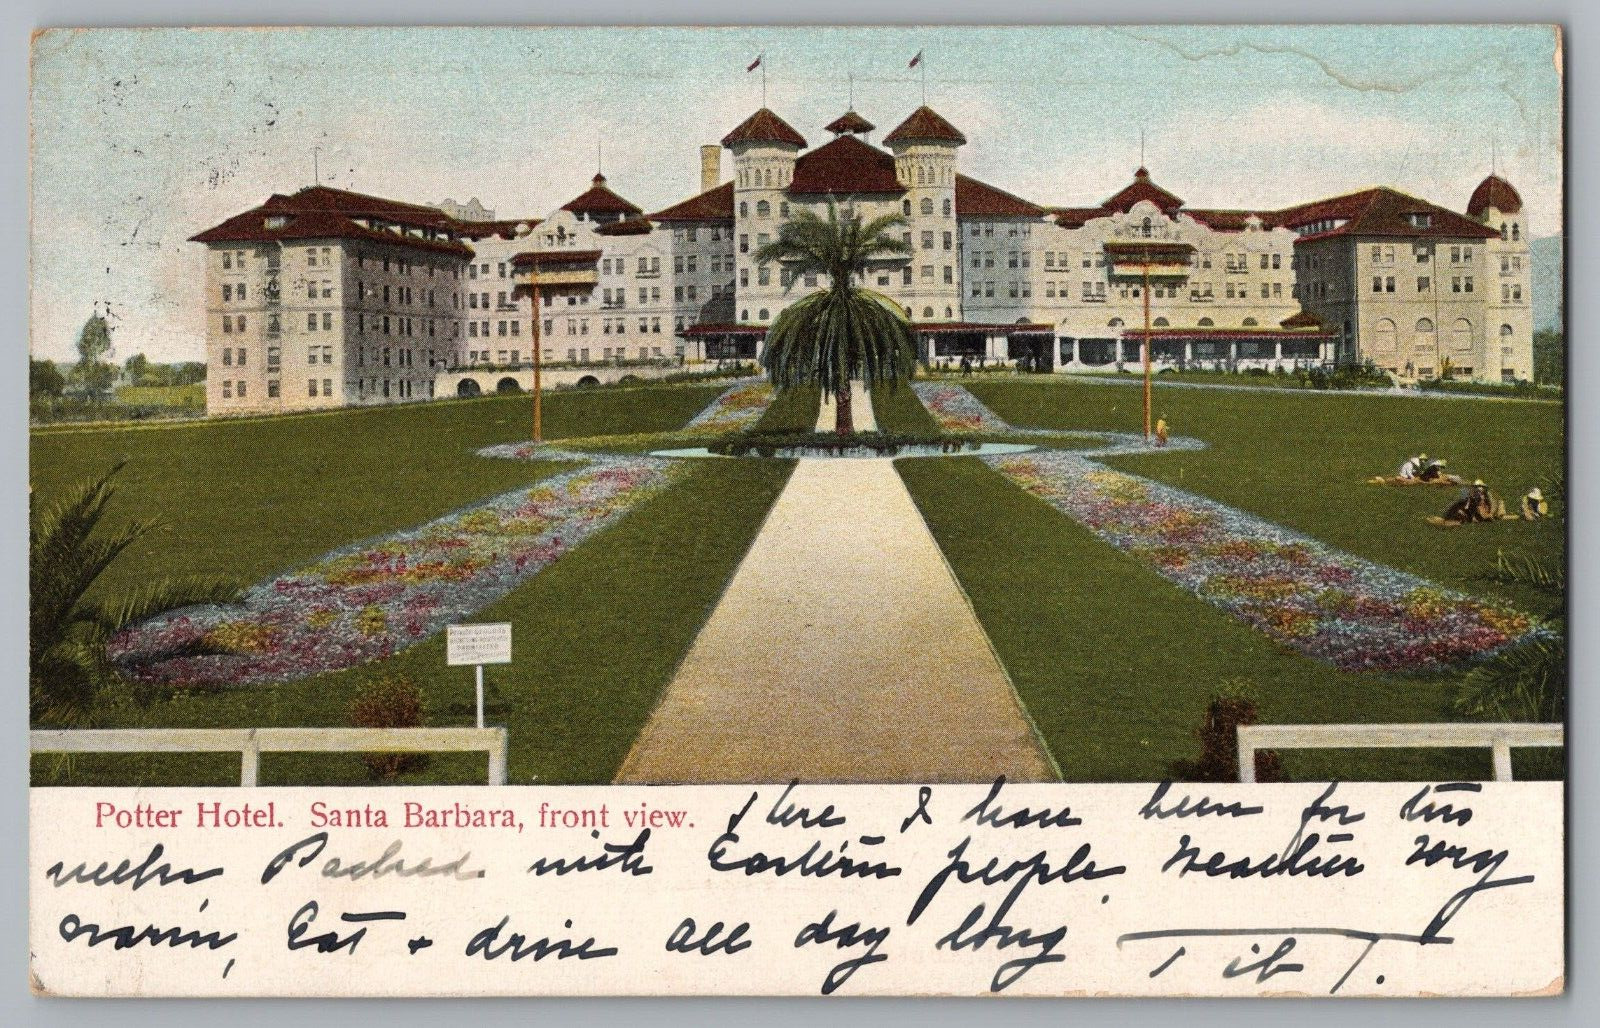 Potter Hotel, Santa Barbara, California c1906 Postcard